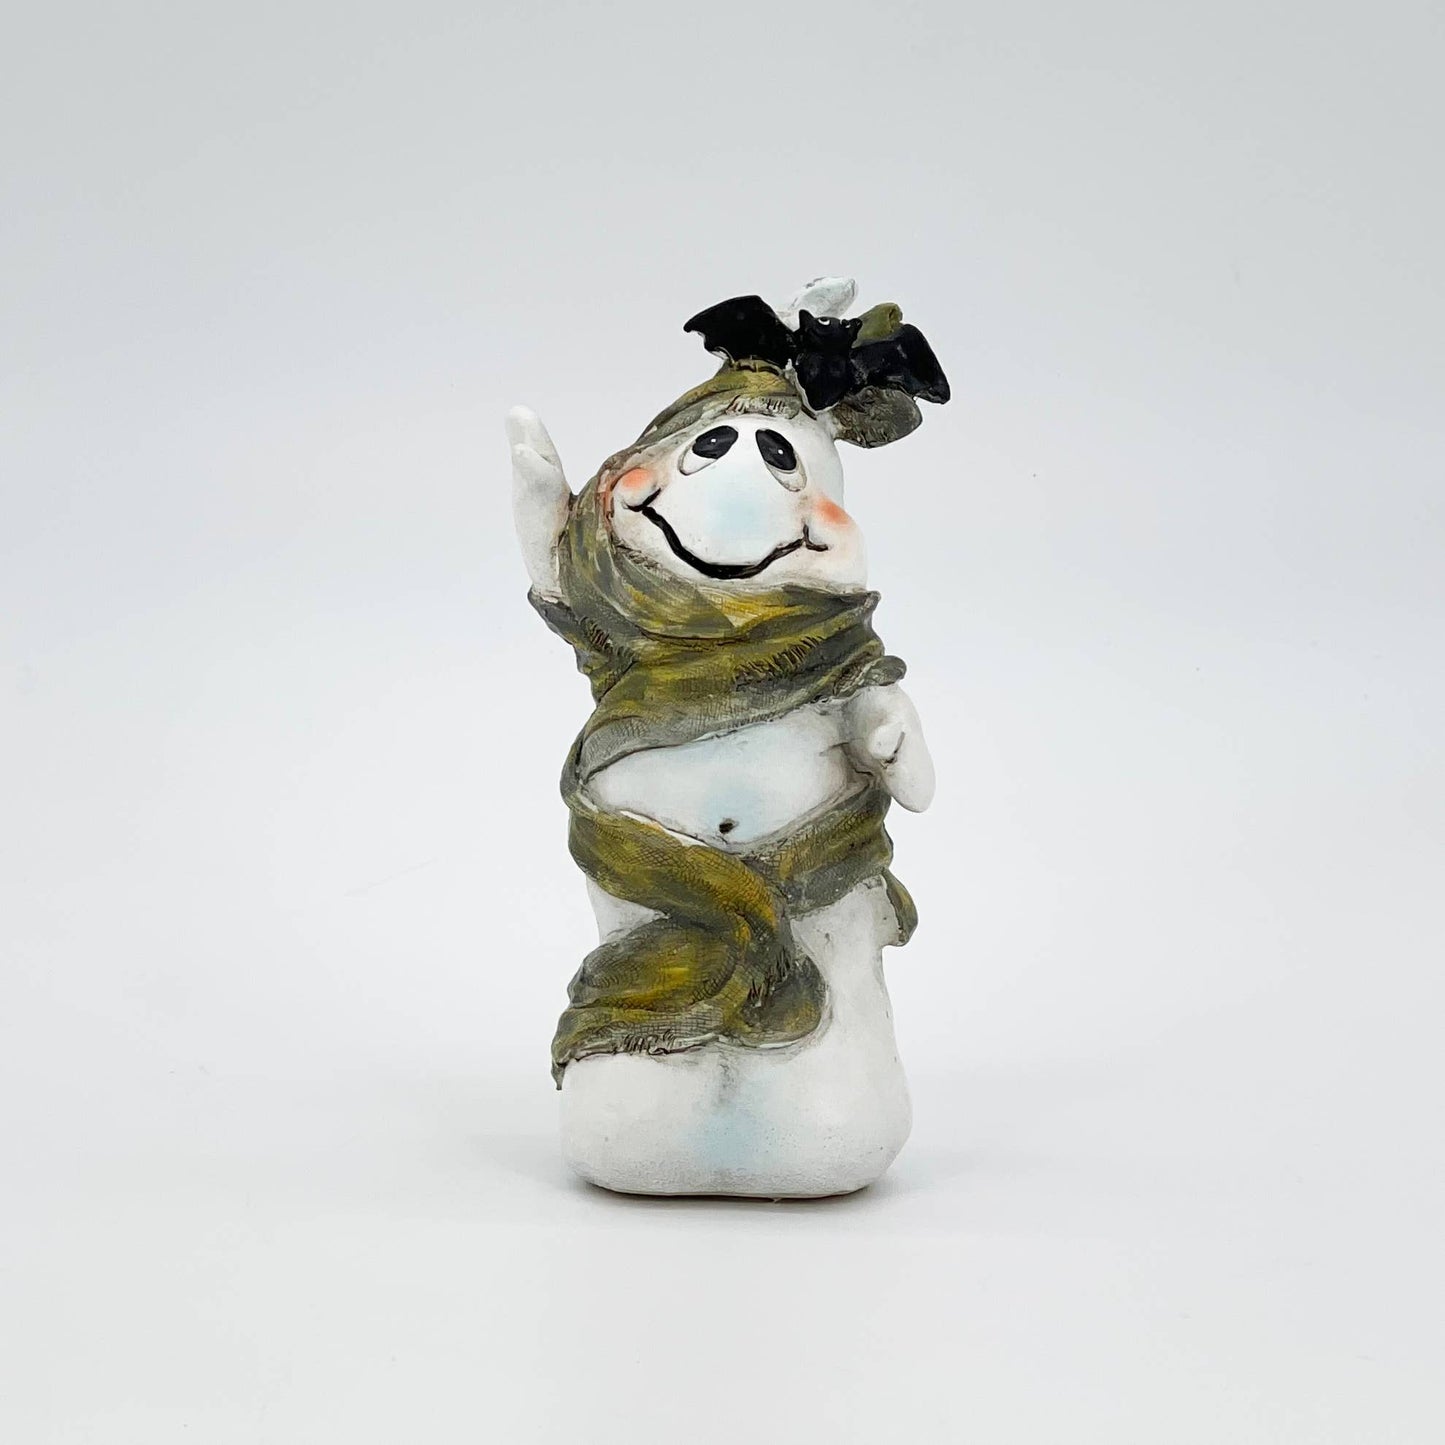 Galt International Company - 6" Cute Mummified Ghost Figurine